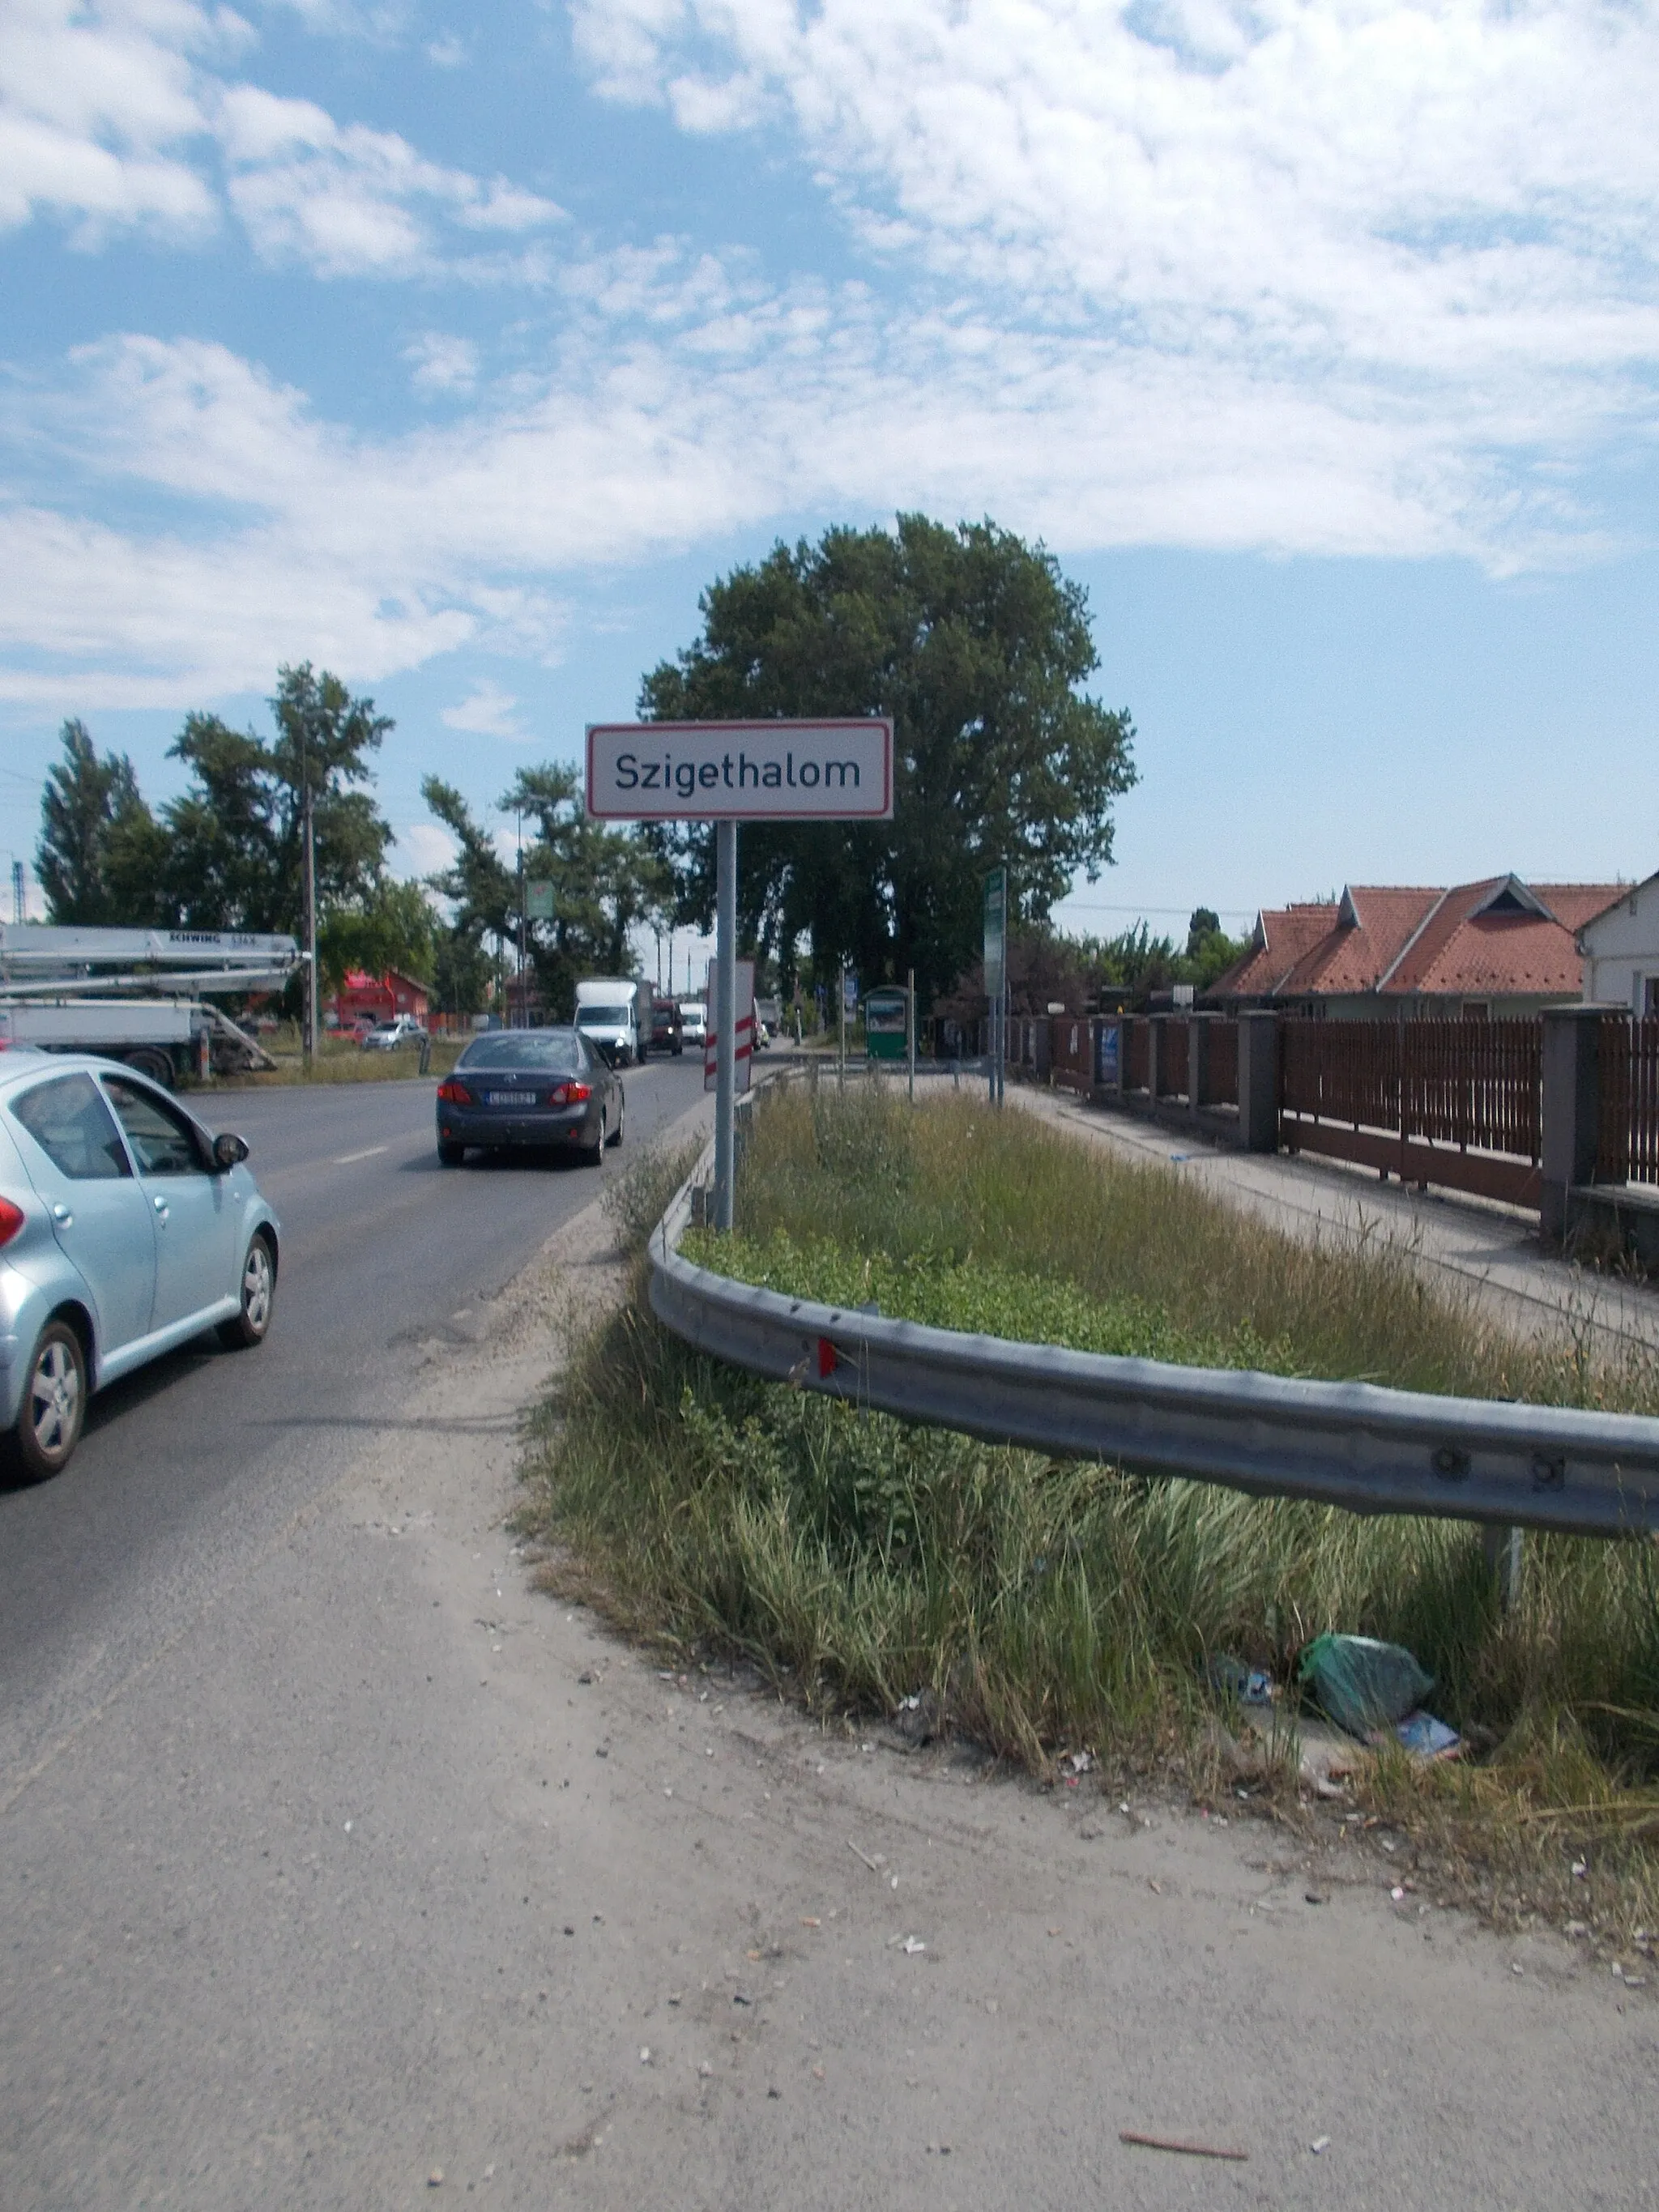 Photo showing: : City limit sign. - Kűlső Mű út, Szigethalom, Pest County, Hungary.